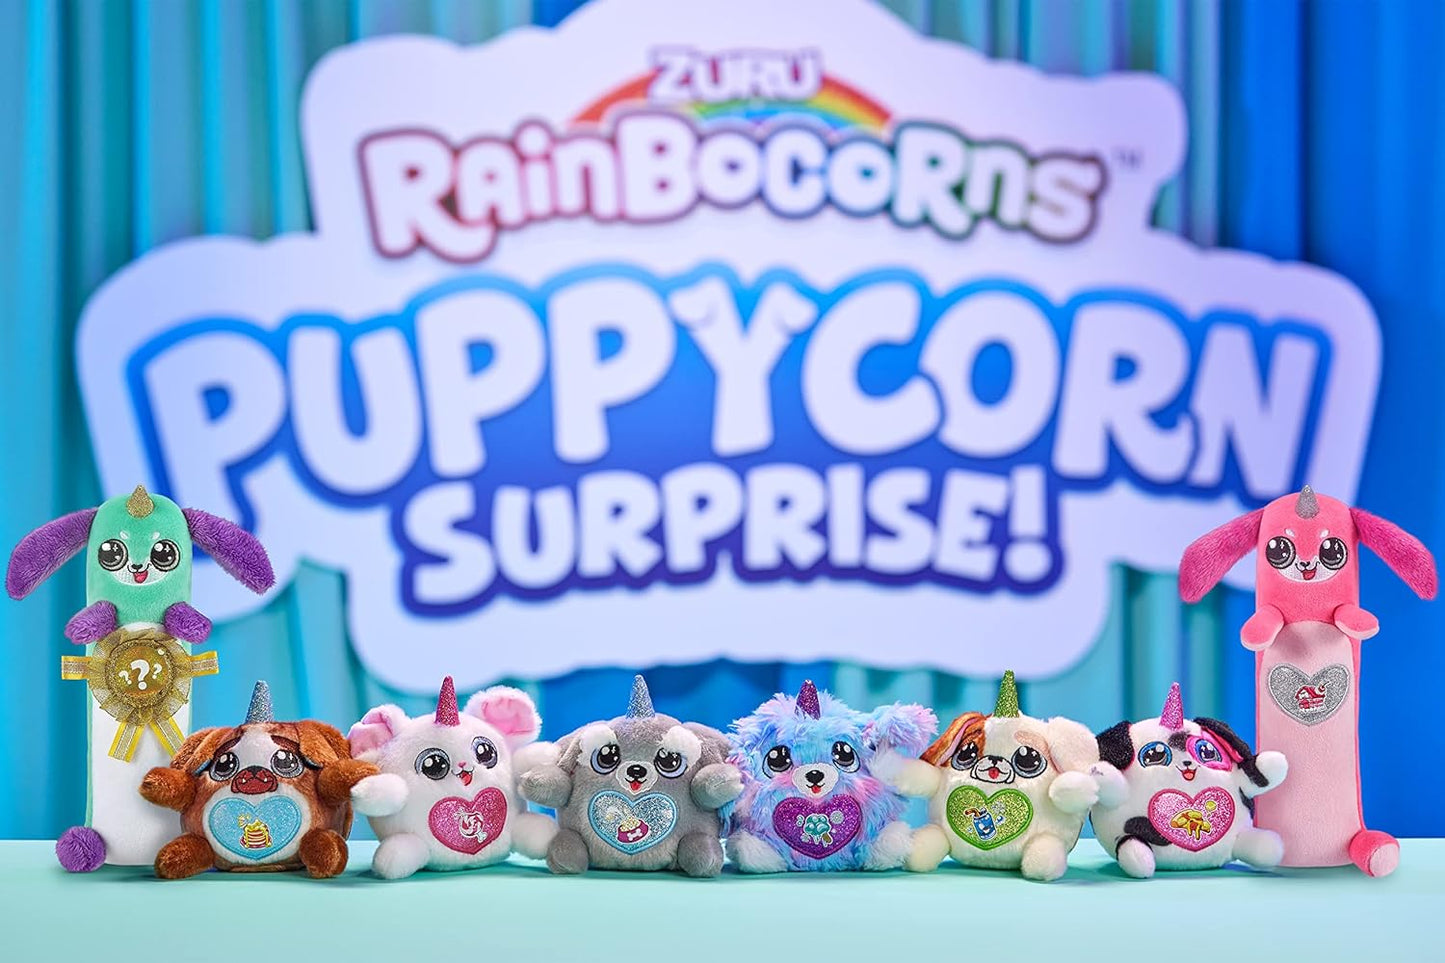 Rainbocorns: Puppycorn Surprise! Mystery Egg (Styles Vary)